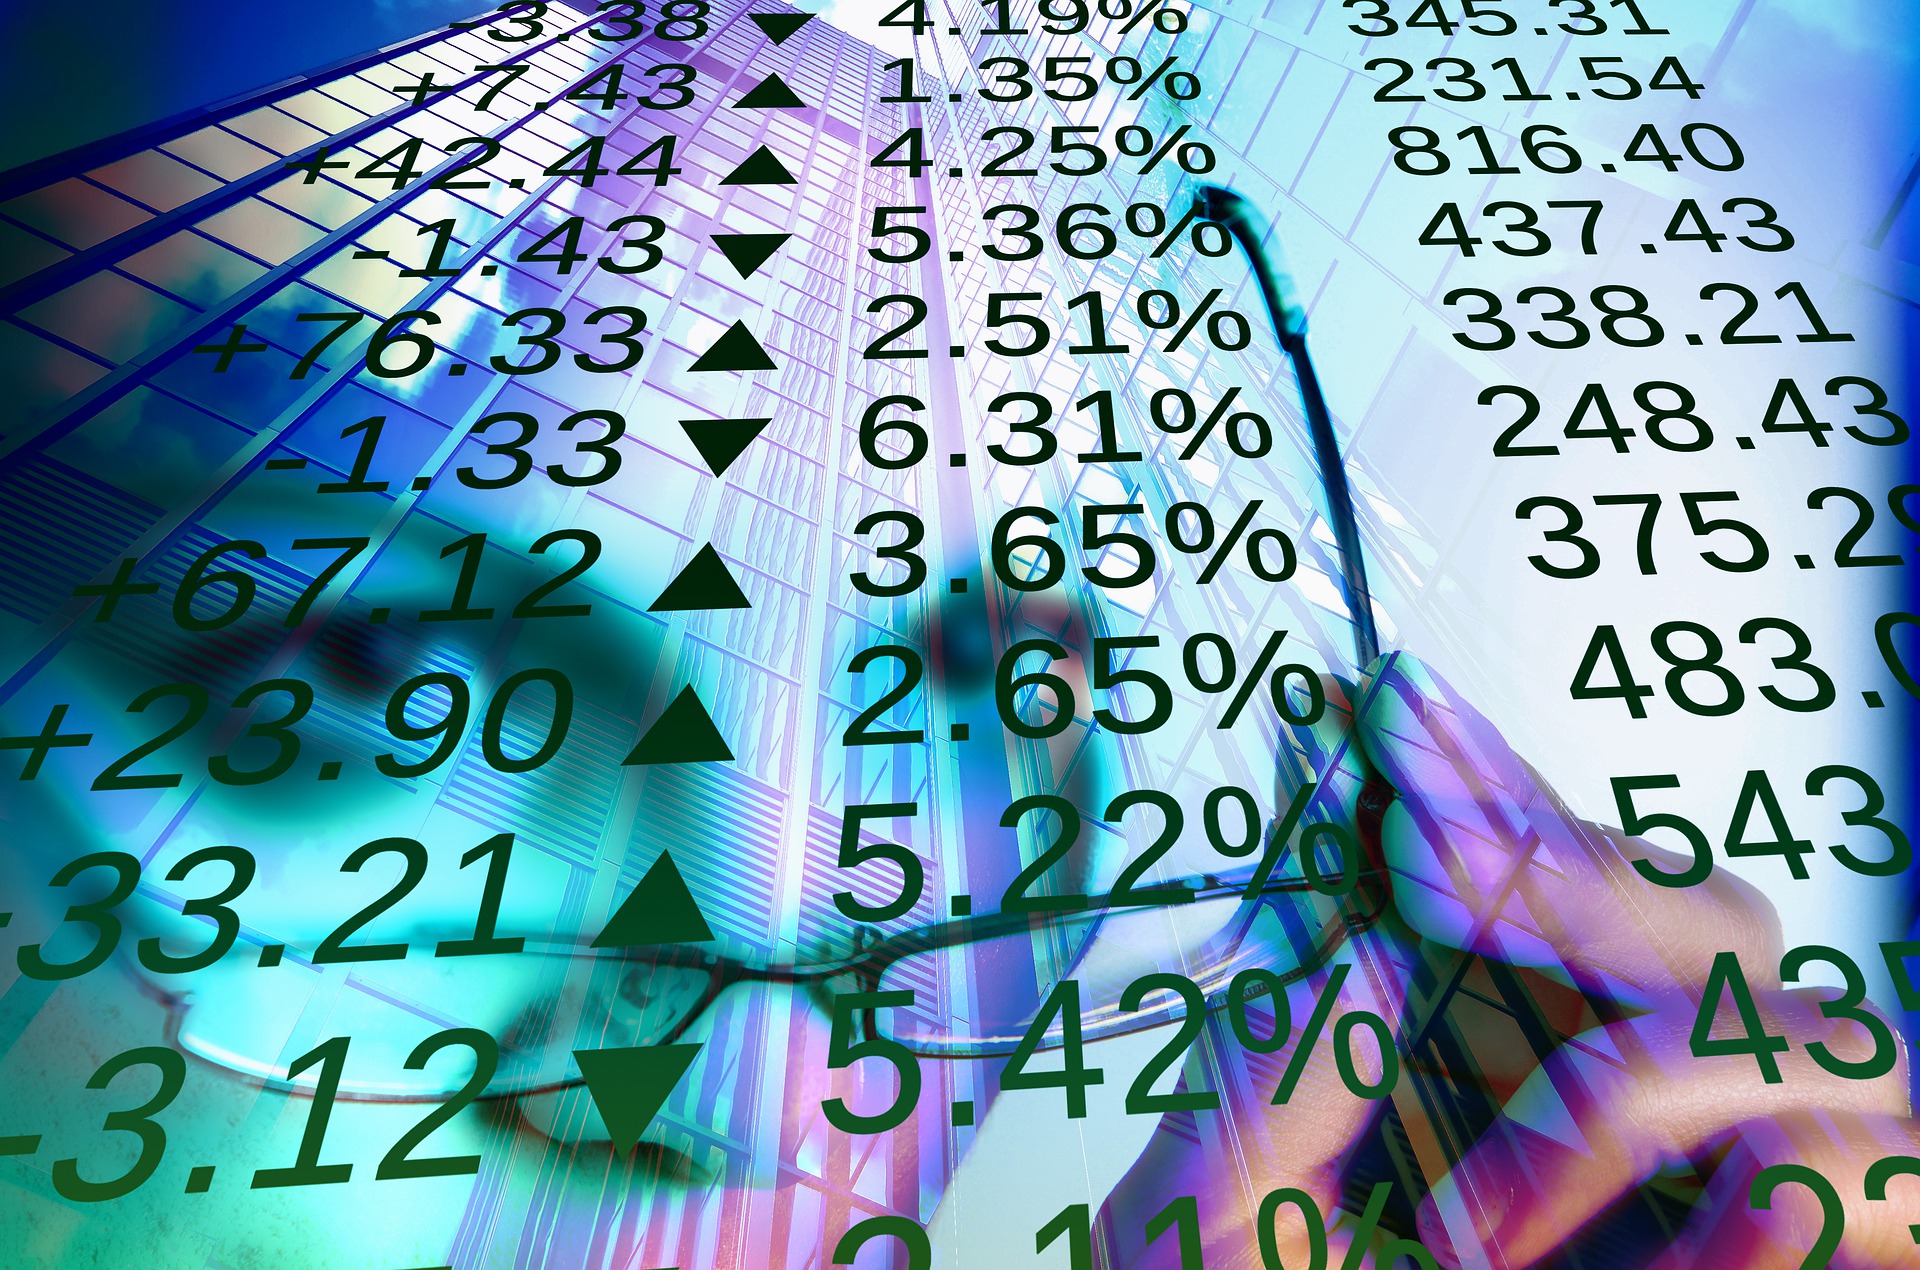 Stock market data